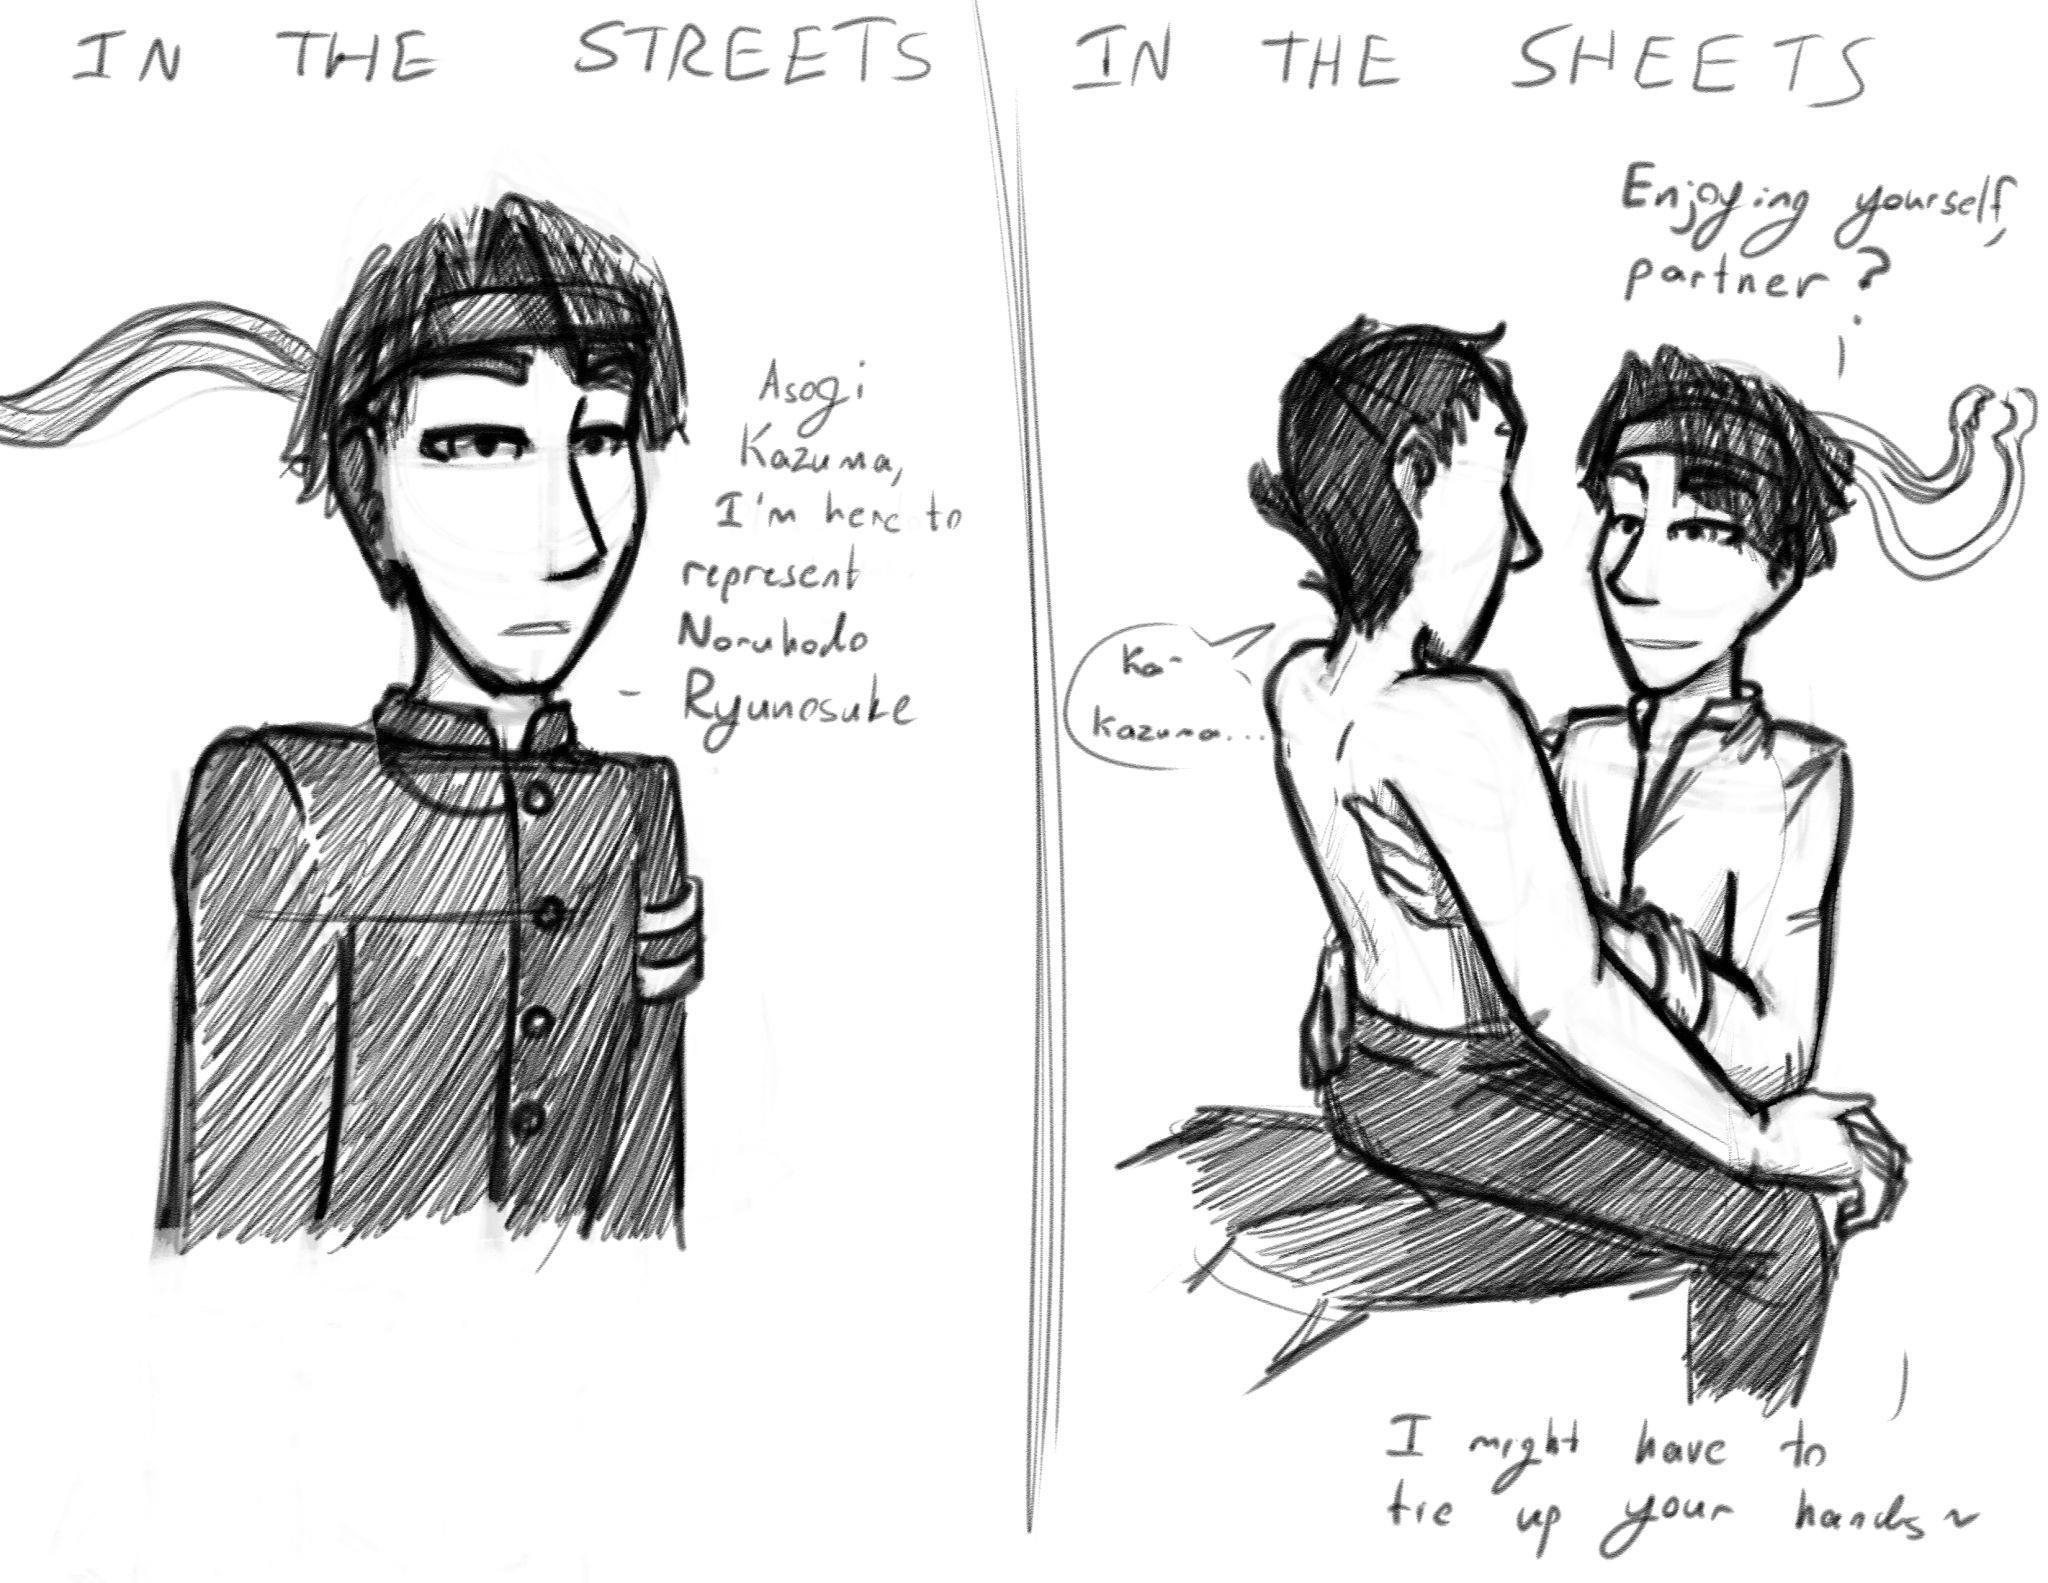 The the freak sheets streets gentleman in in 13 Secret